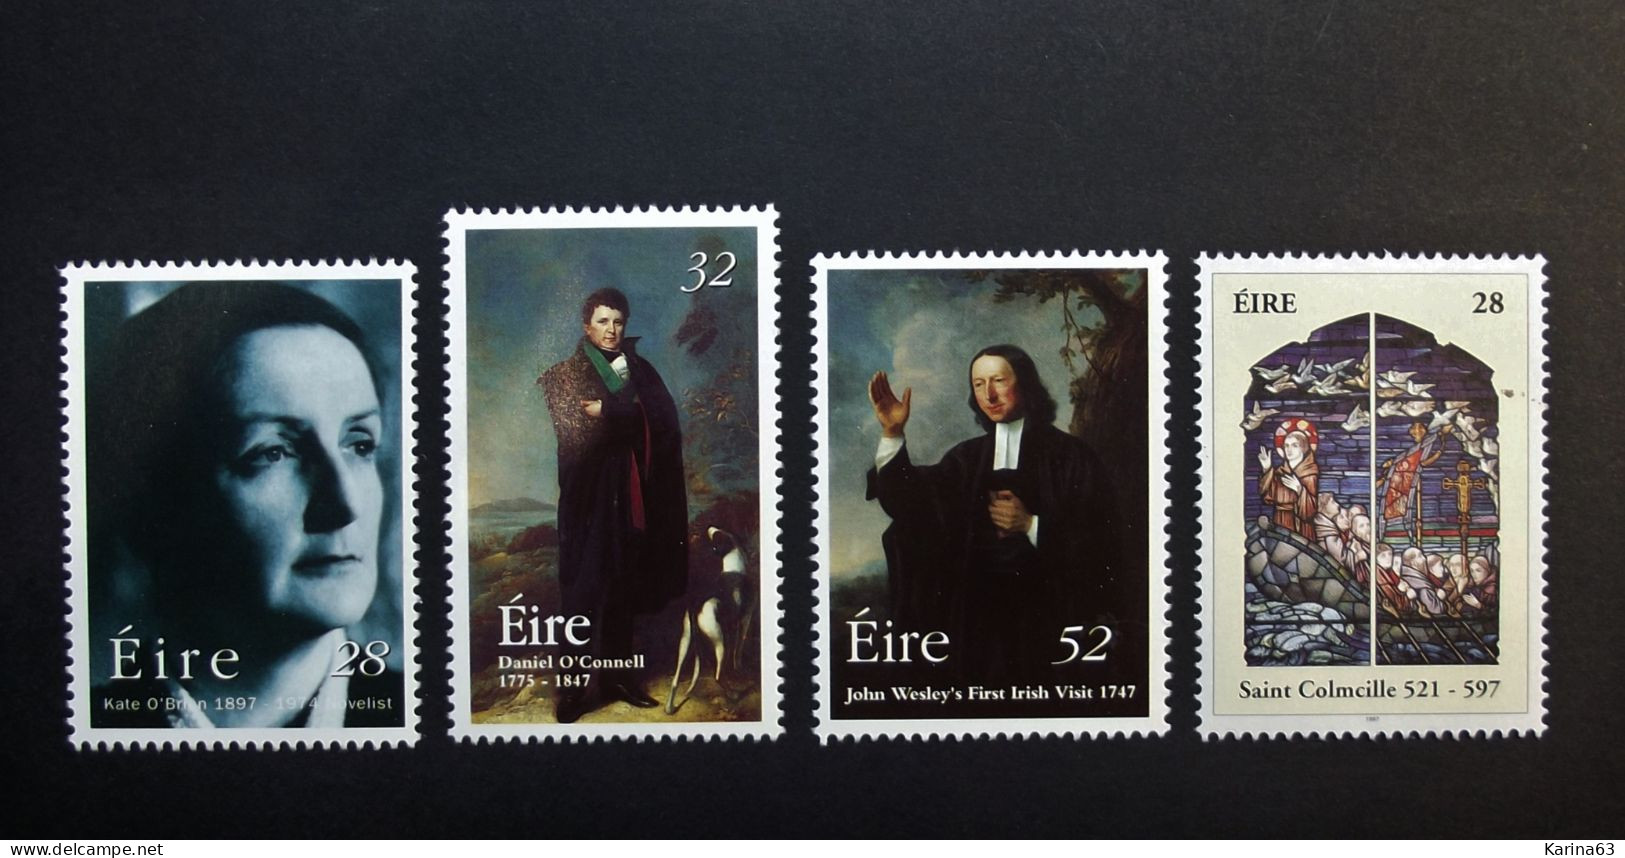 Ireland - Irelande - Eire - 1997 - Y&T N° 1014 / 1017 ( 4 Val.) Irish Culture & History - MNH - Postfris - Neufs